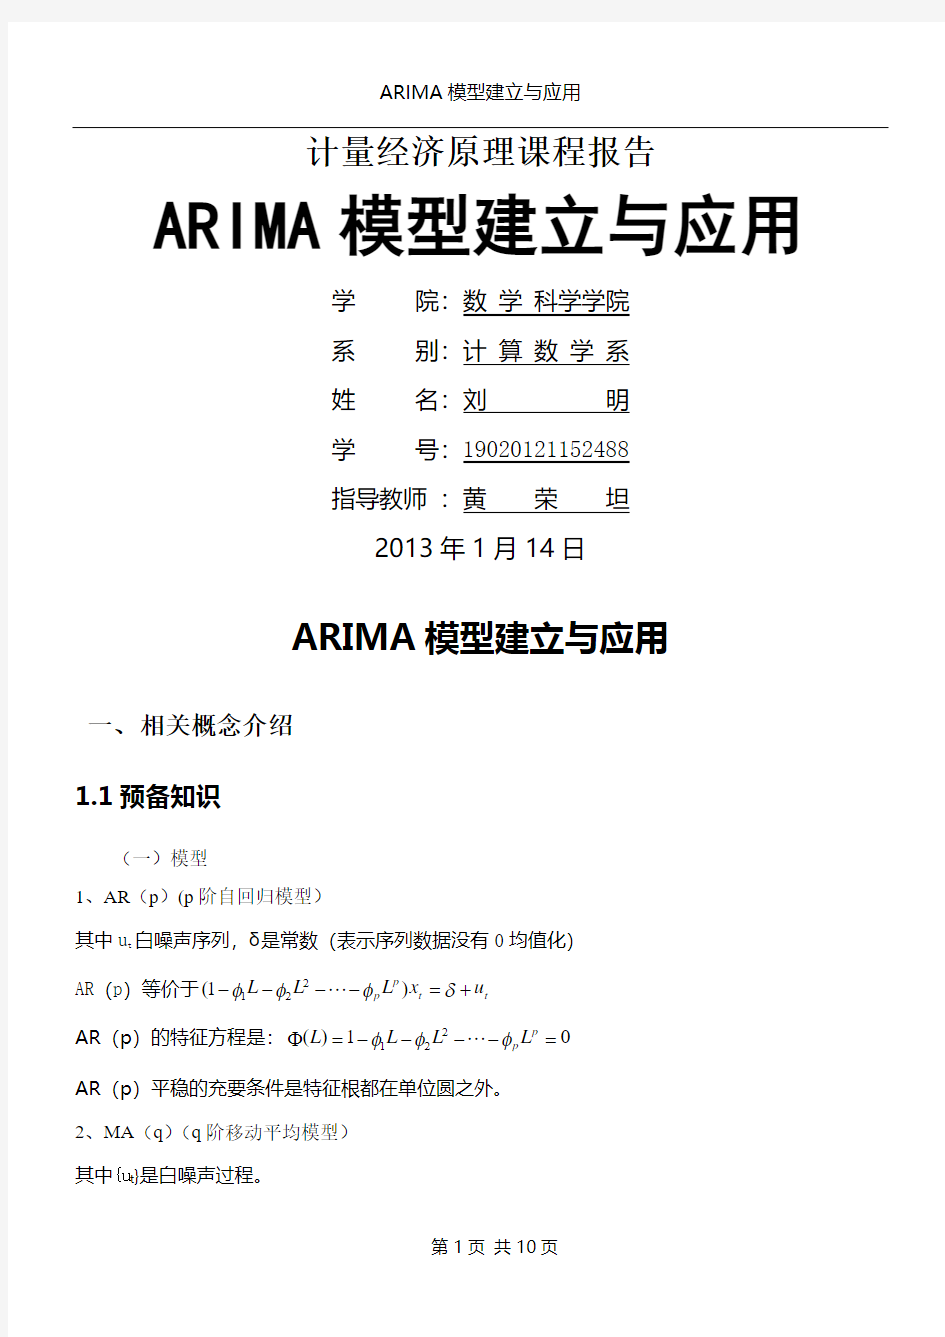 ARIMA模型